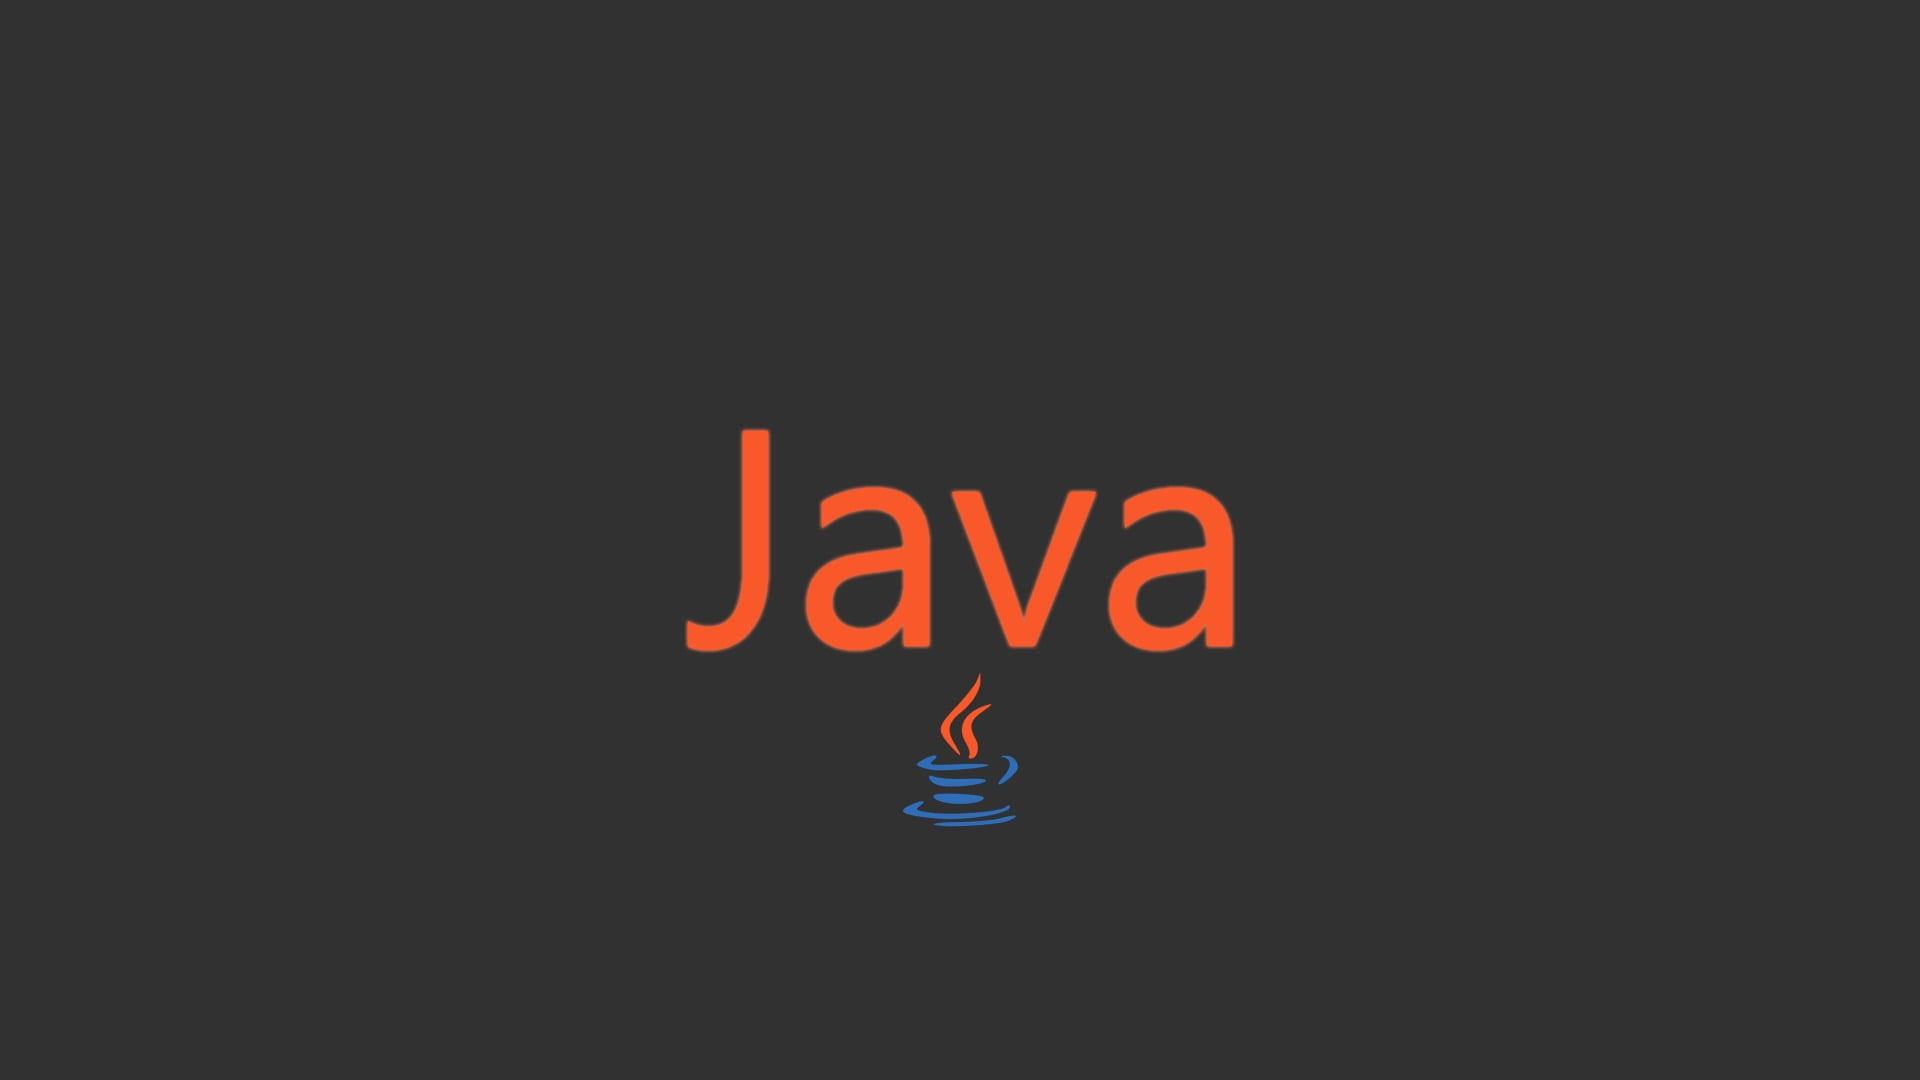 Java logo wallpaper, web development, text, illuminated